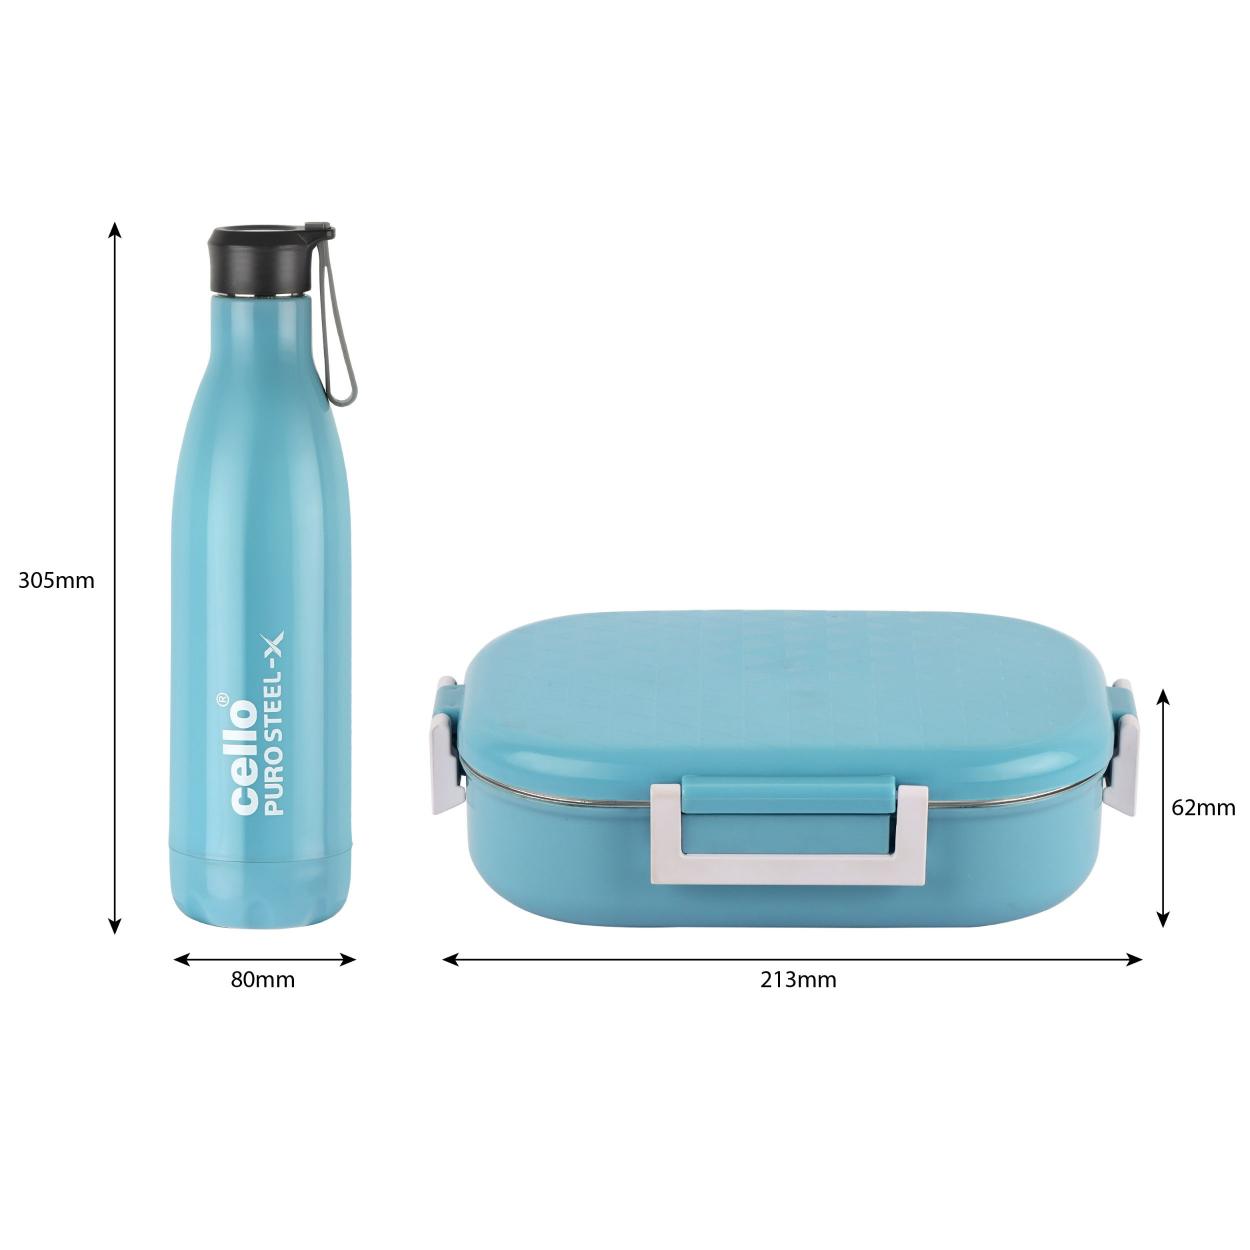 Altro Neo Lunch Box & Water Bottle Set Blue